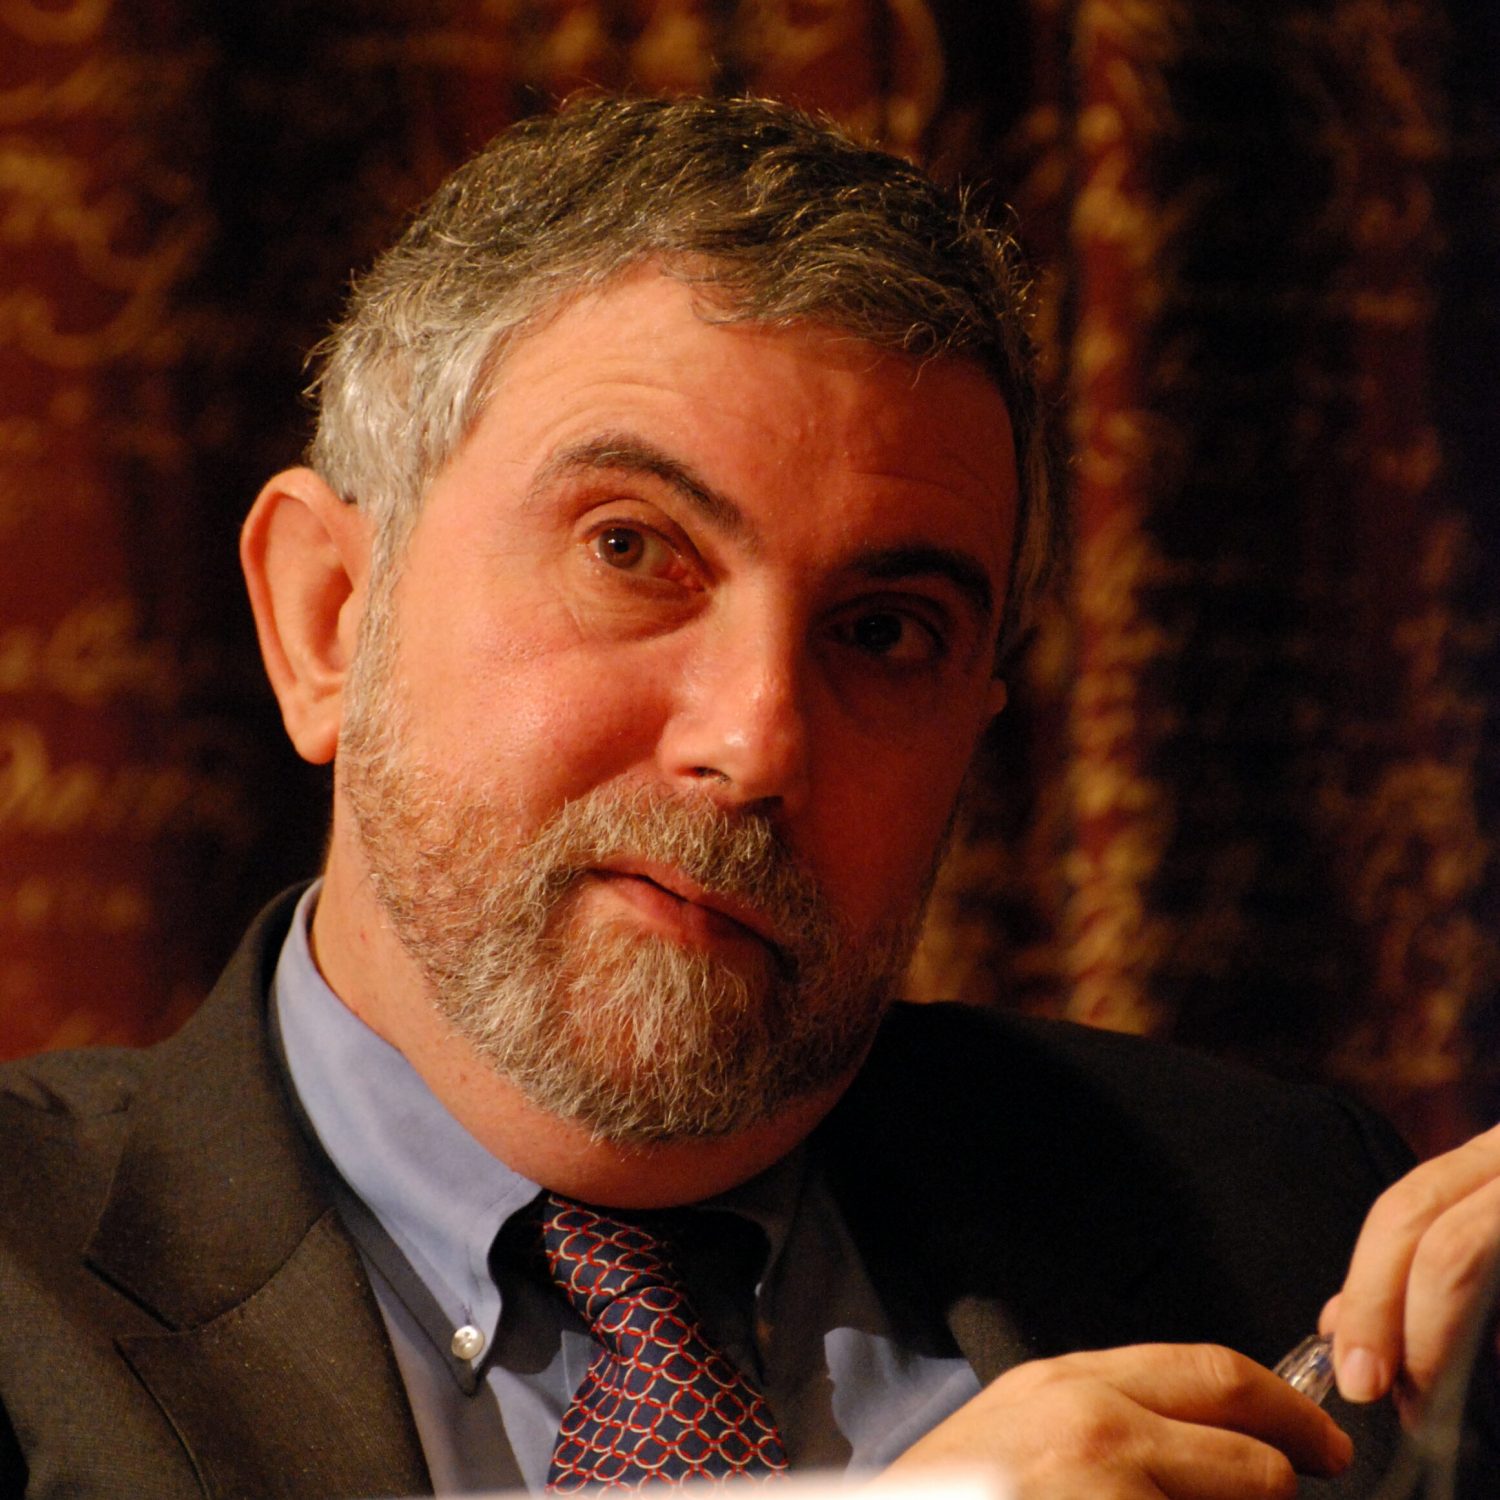 paul-krugman